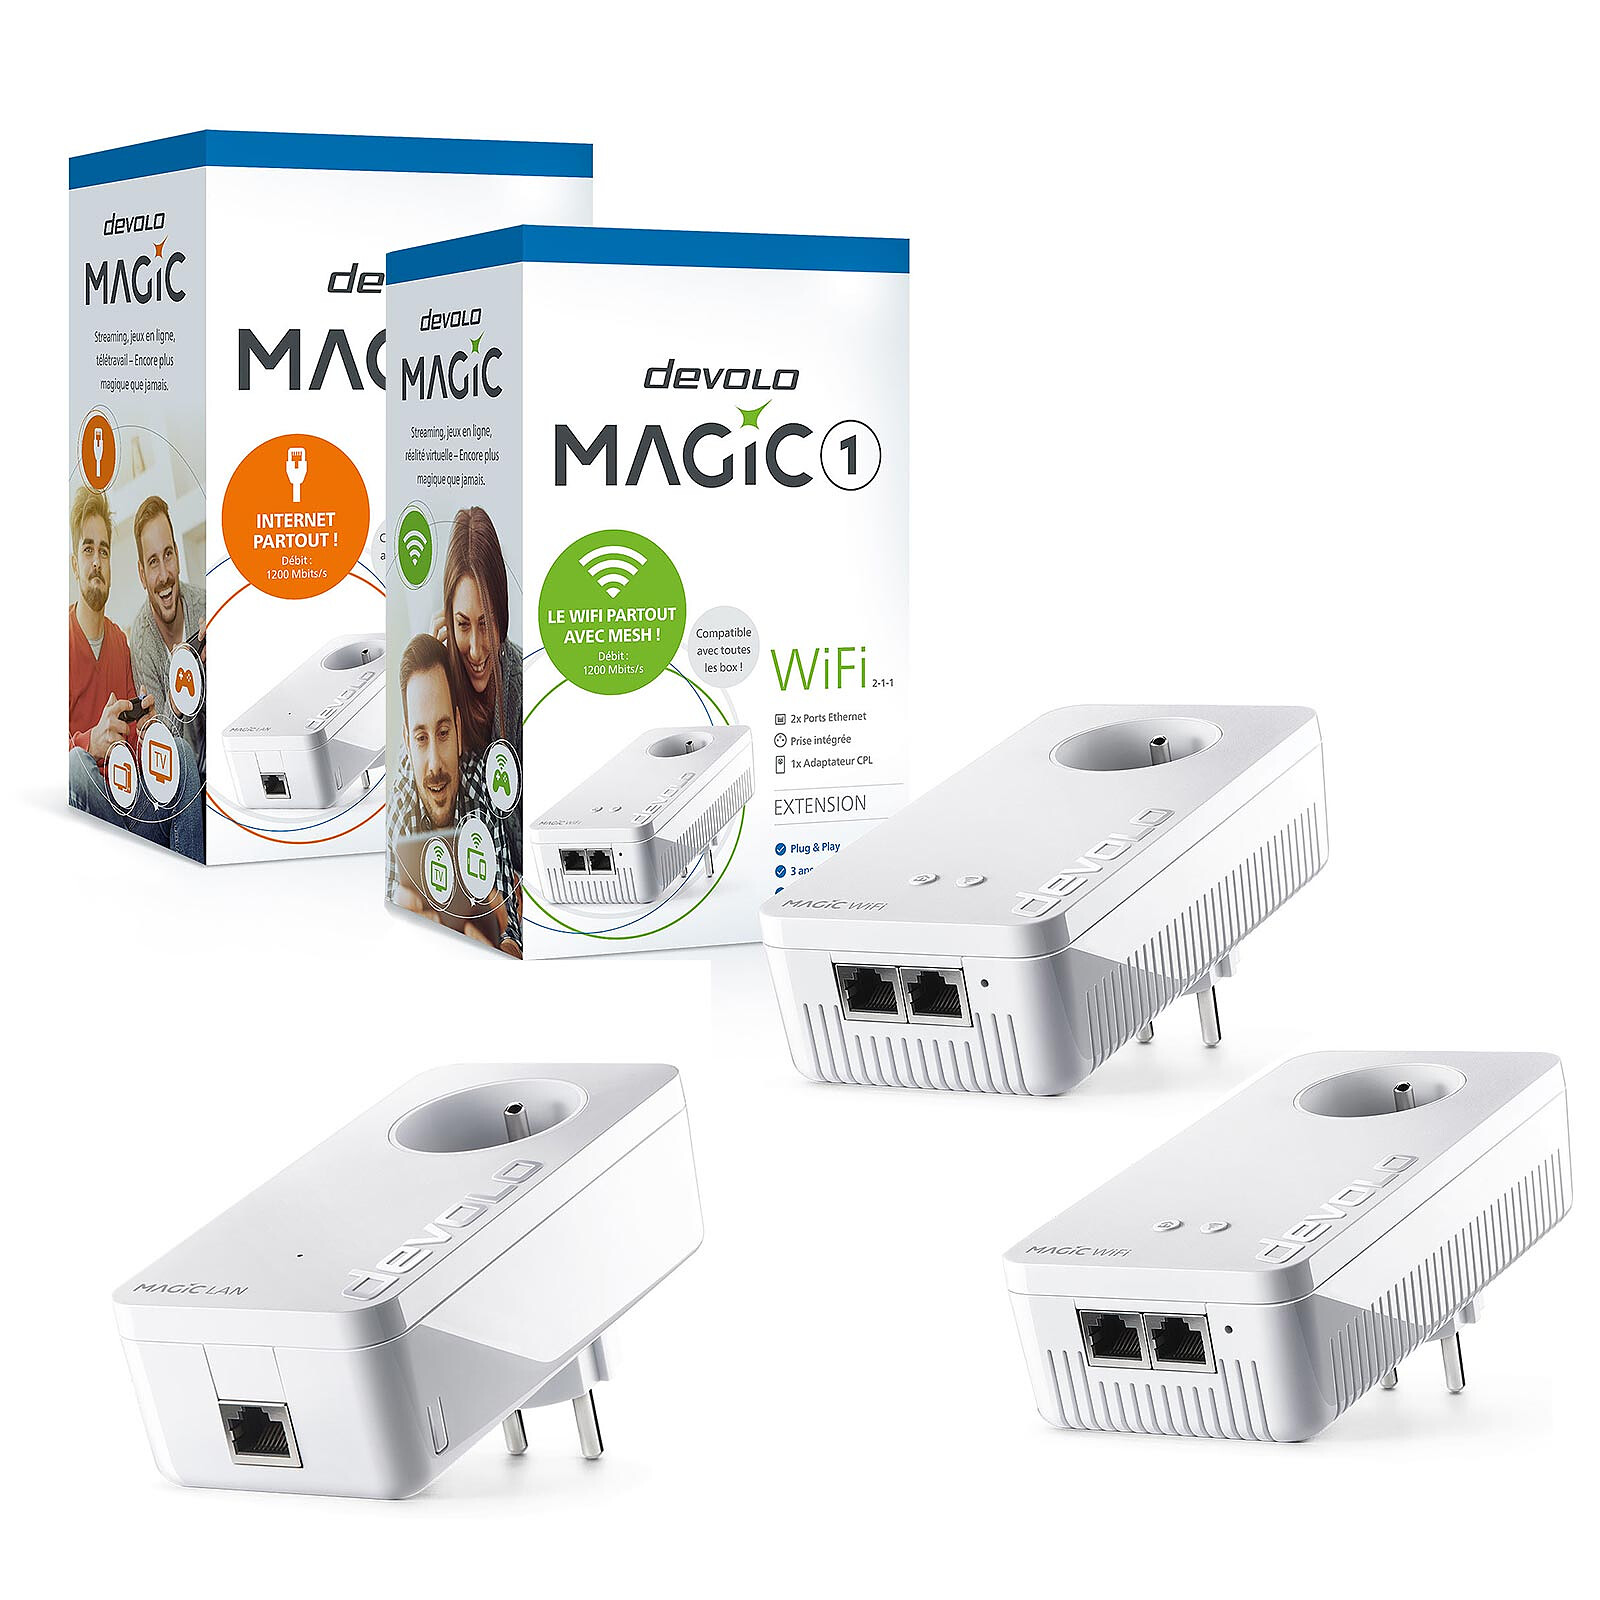 devolo Magic 1 LAN adapter Wi-Fi - (pair) 1 + - 3-year warranty Powerline Magic devolo LDLC